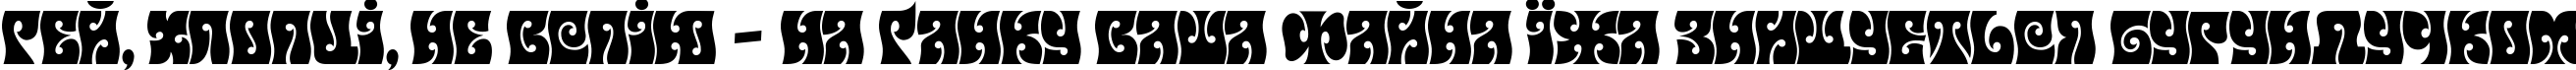 Пример написания шрифтом Musetta текста на украинском